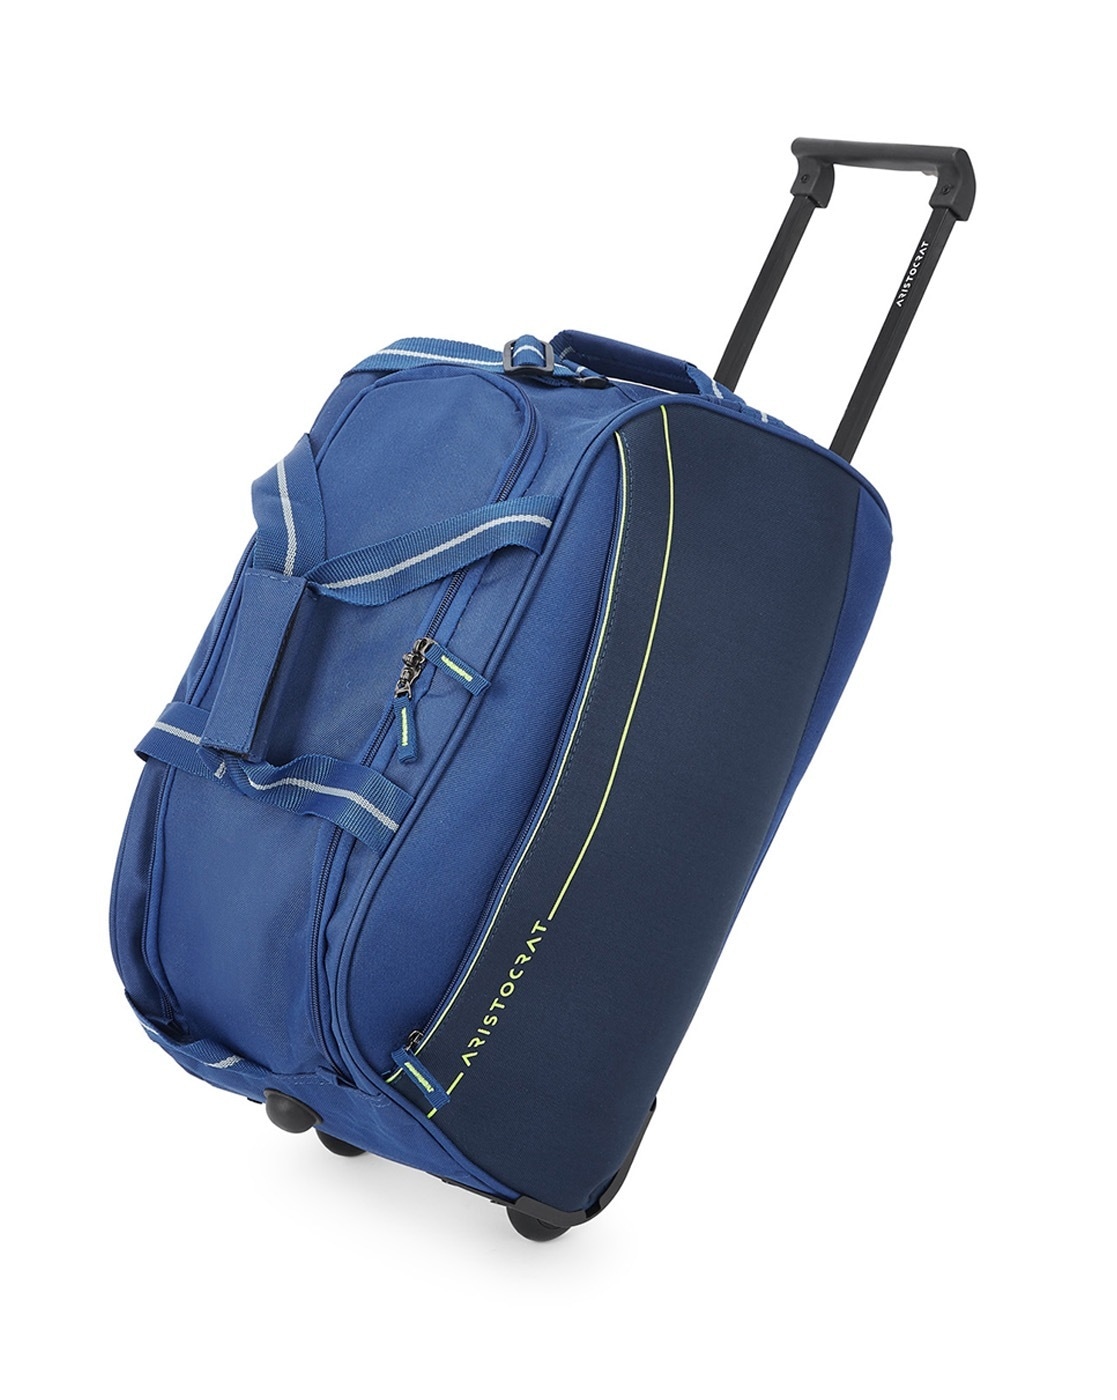 Shop Bric's USA Luggage Model: PRONTO |Si – Luggage Factory